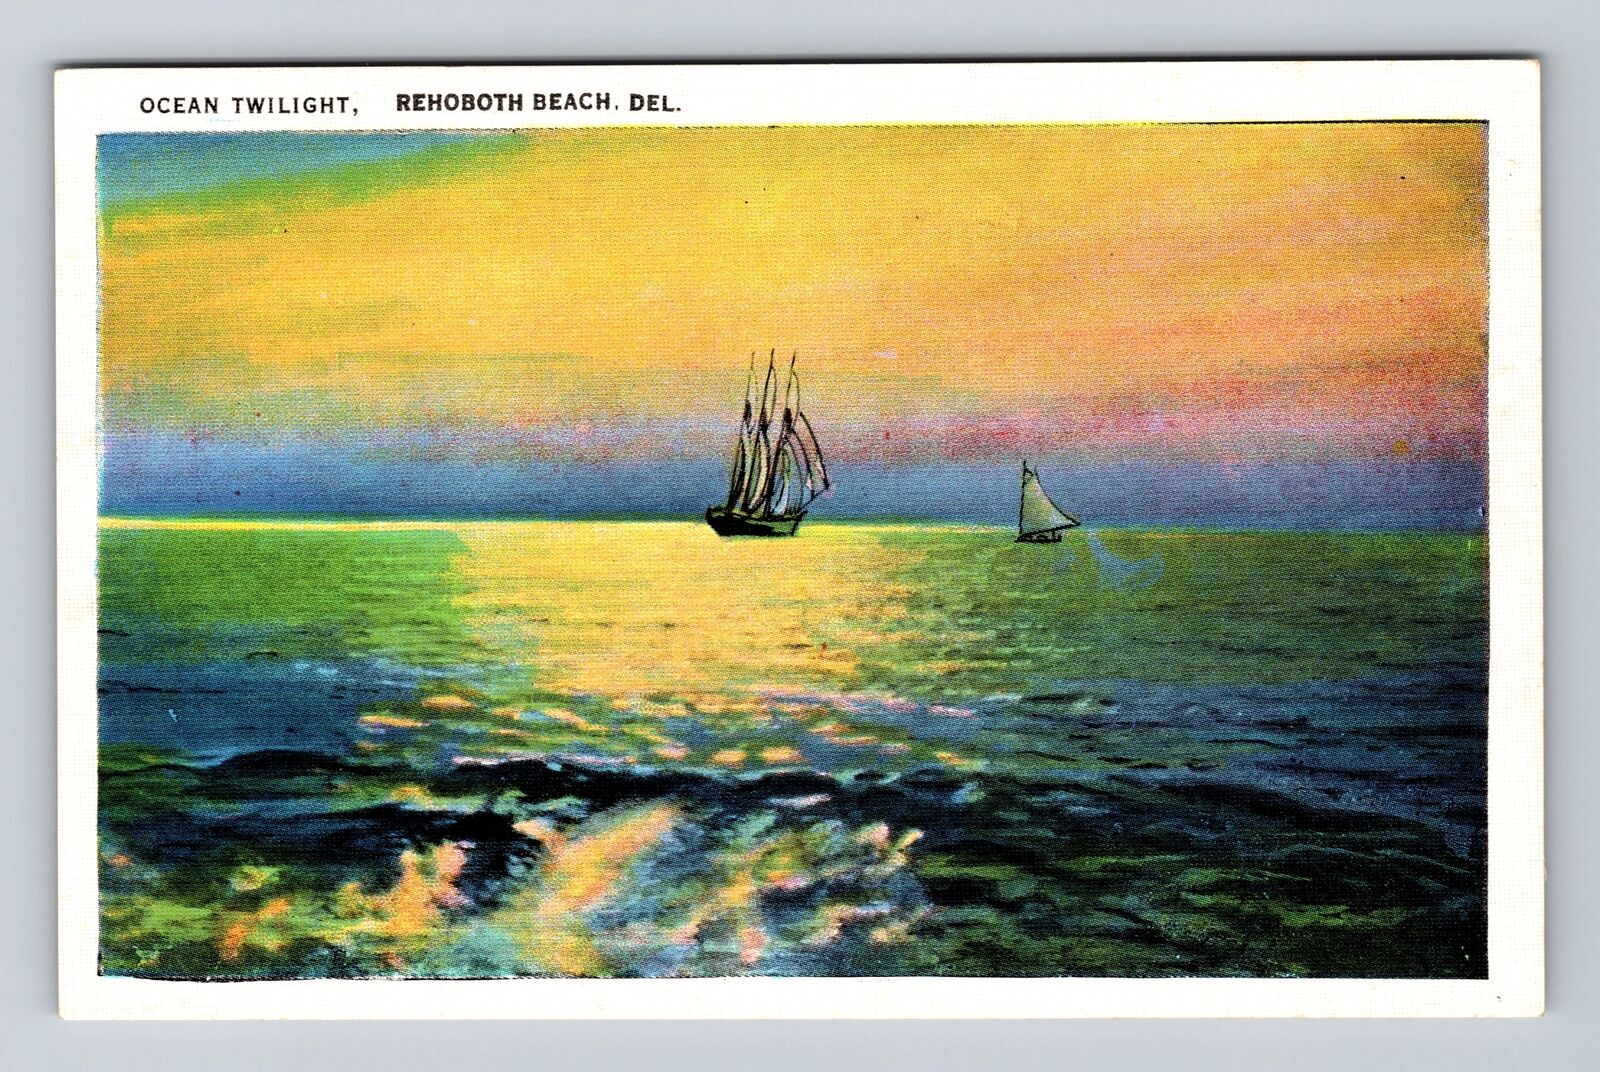 Rehoboth Beach DE-Delaware, Ocean Twilight, Antique Souvenir Vintage Postcard